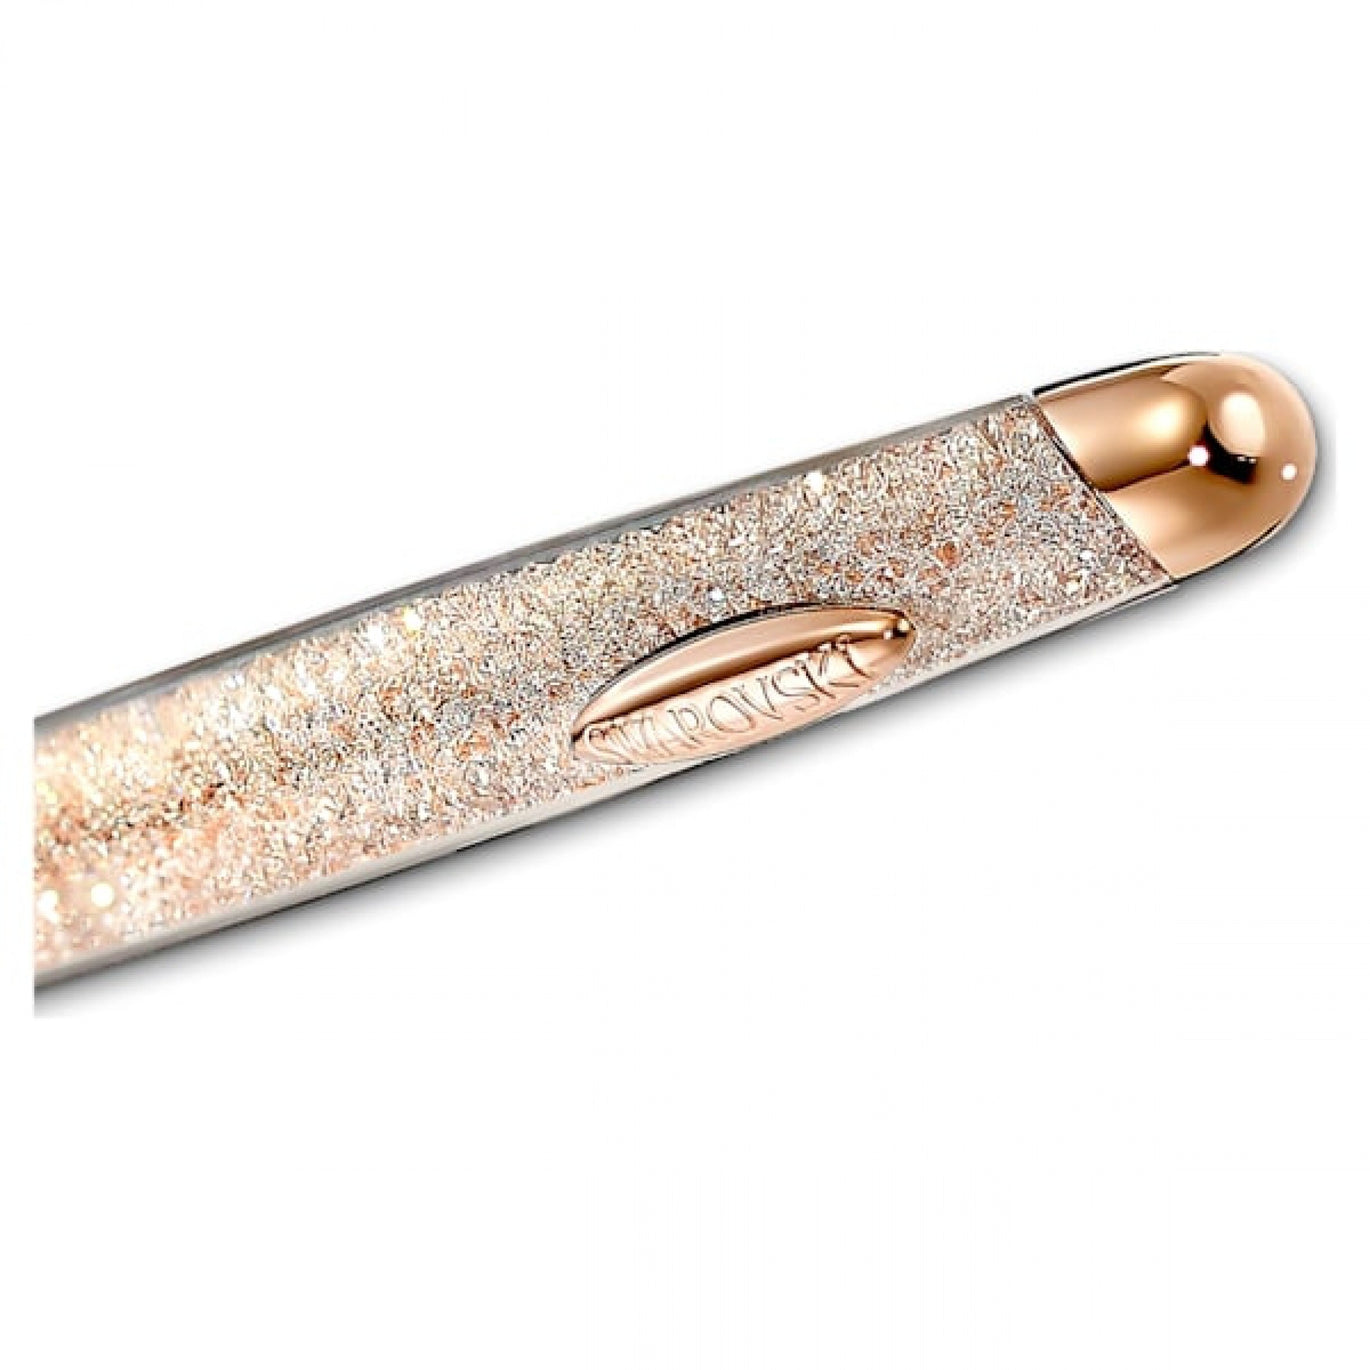 Swarovski Crystalline Nova Ballpoint Pen, Rose-Gold Tone Plated